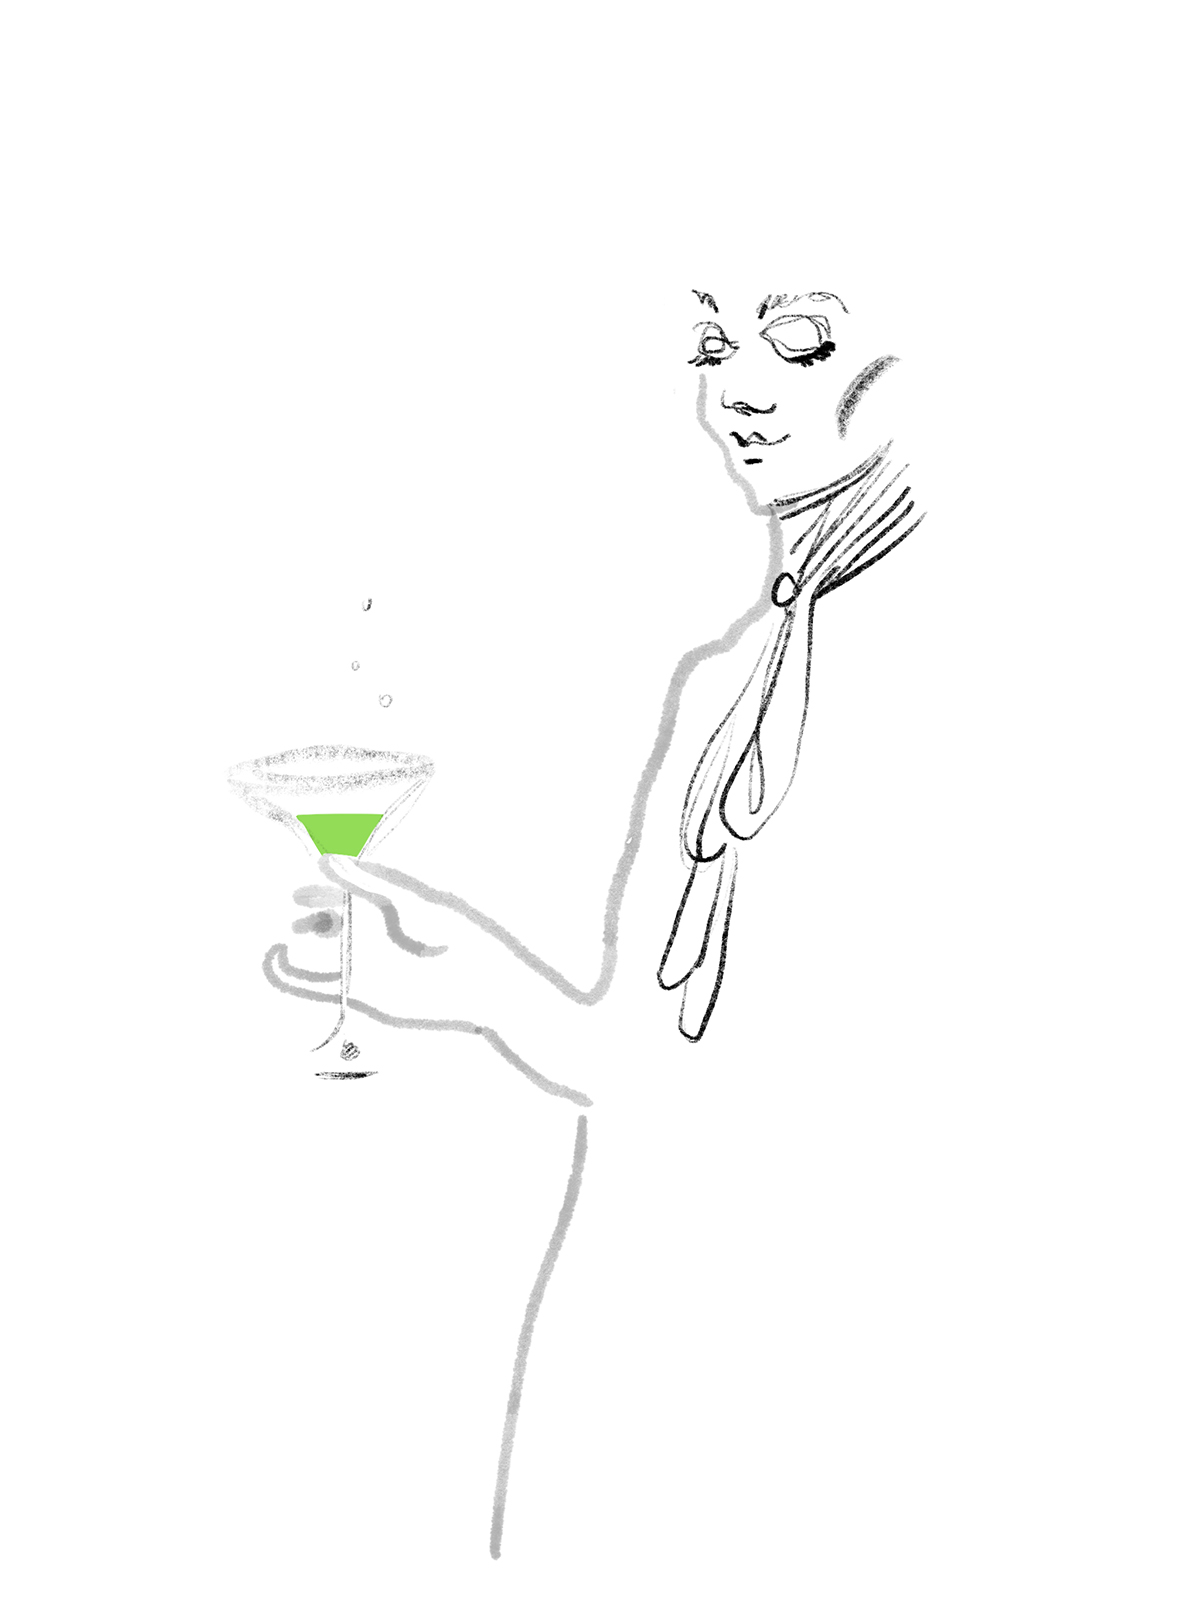 Tipe alla Vernice, the cocktail